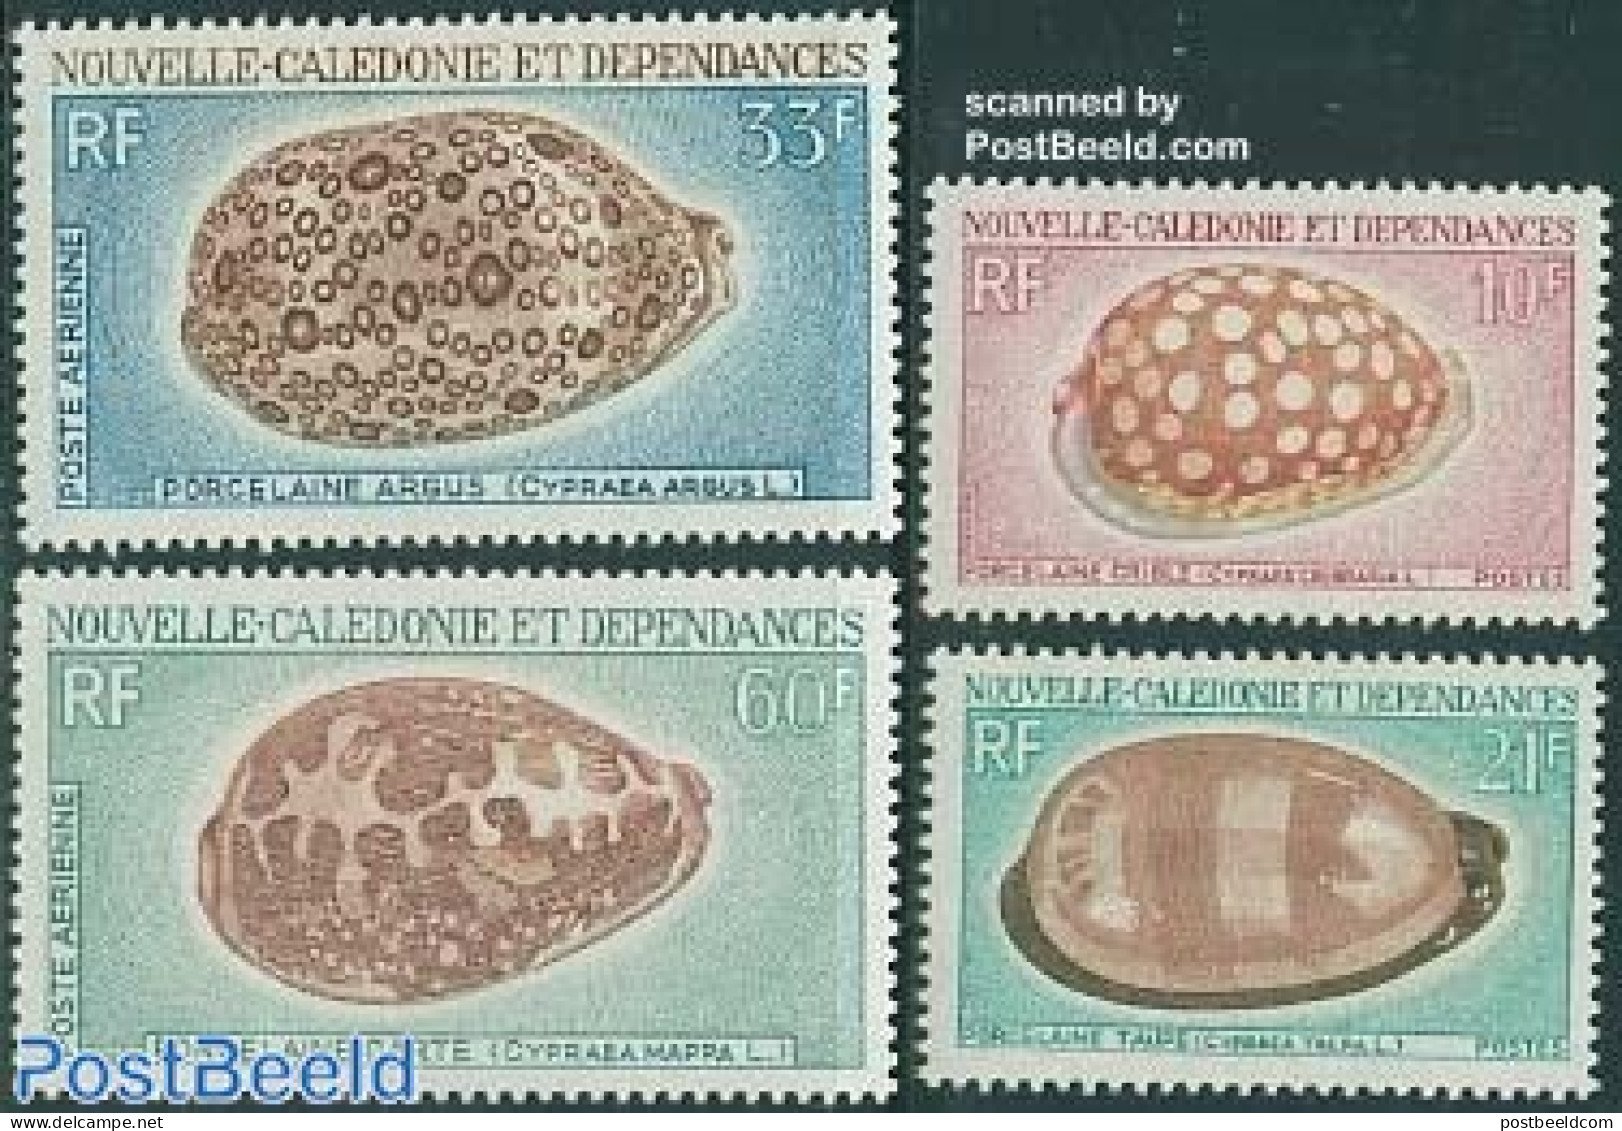 New Caledonia 1970 Shells 4v, Mint NH, Nature - Shells & Crustaceans - Unused Stamps